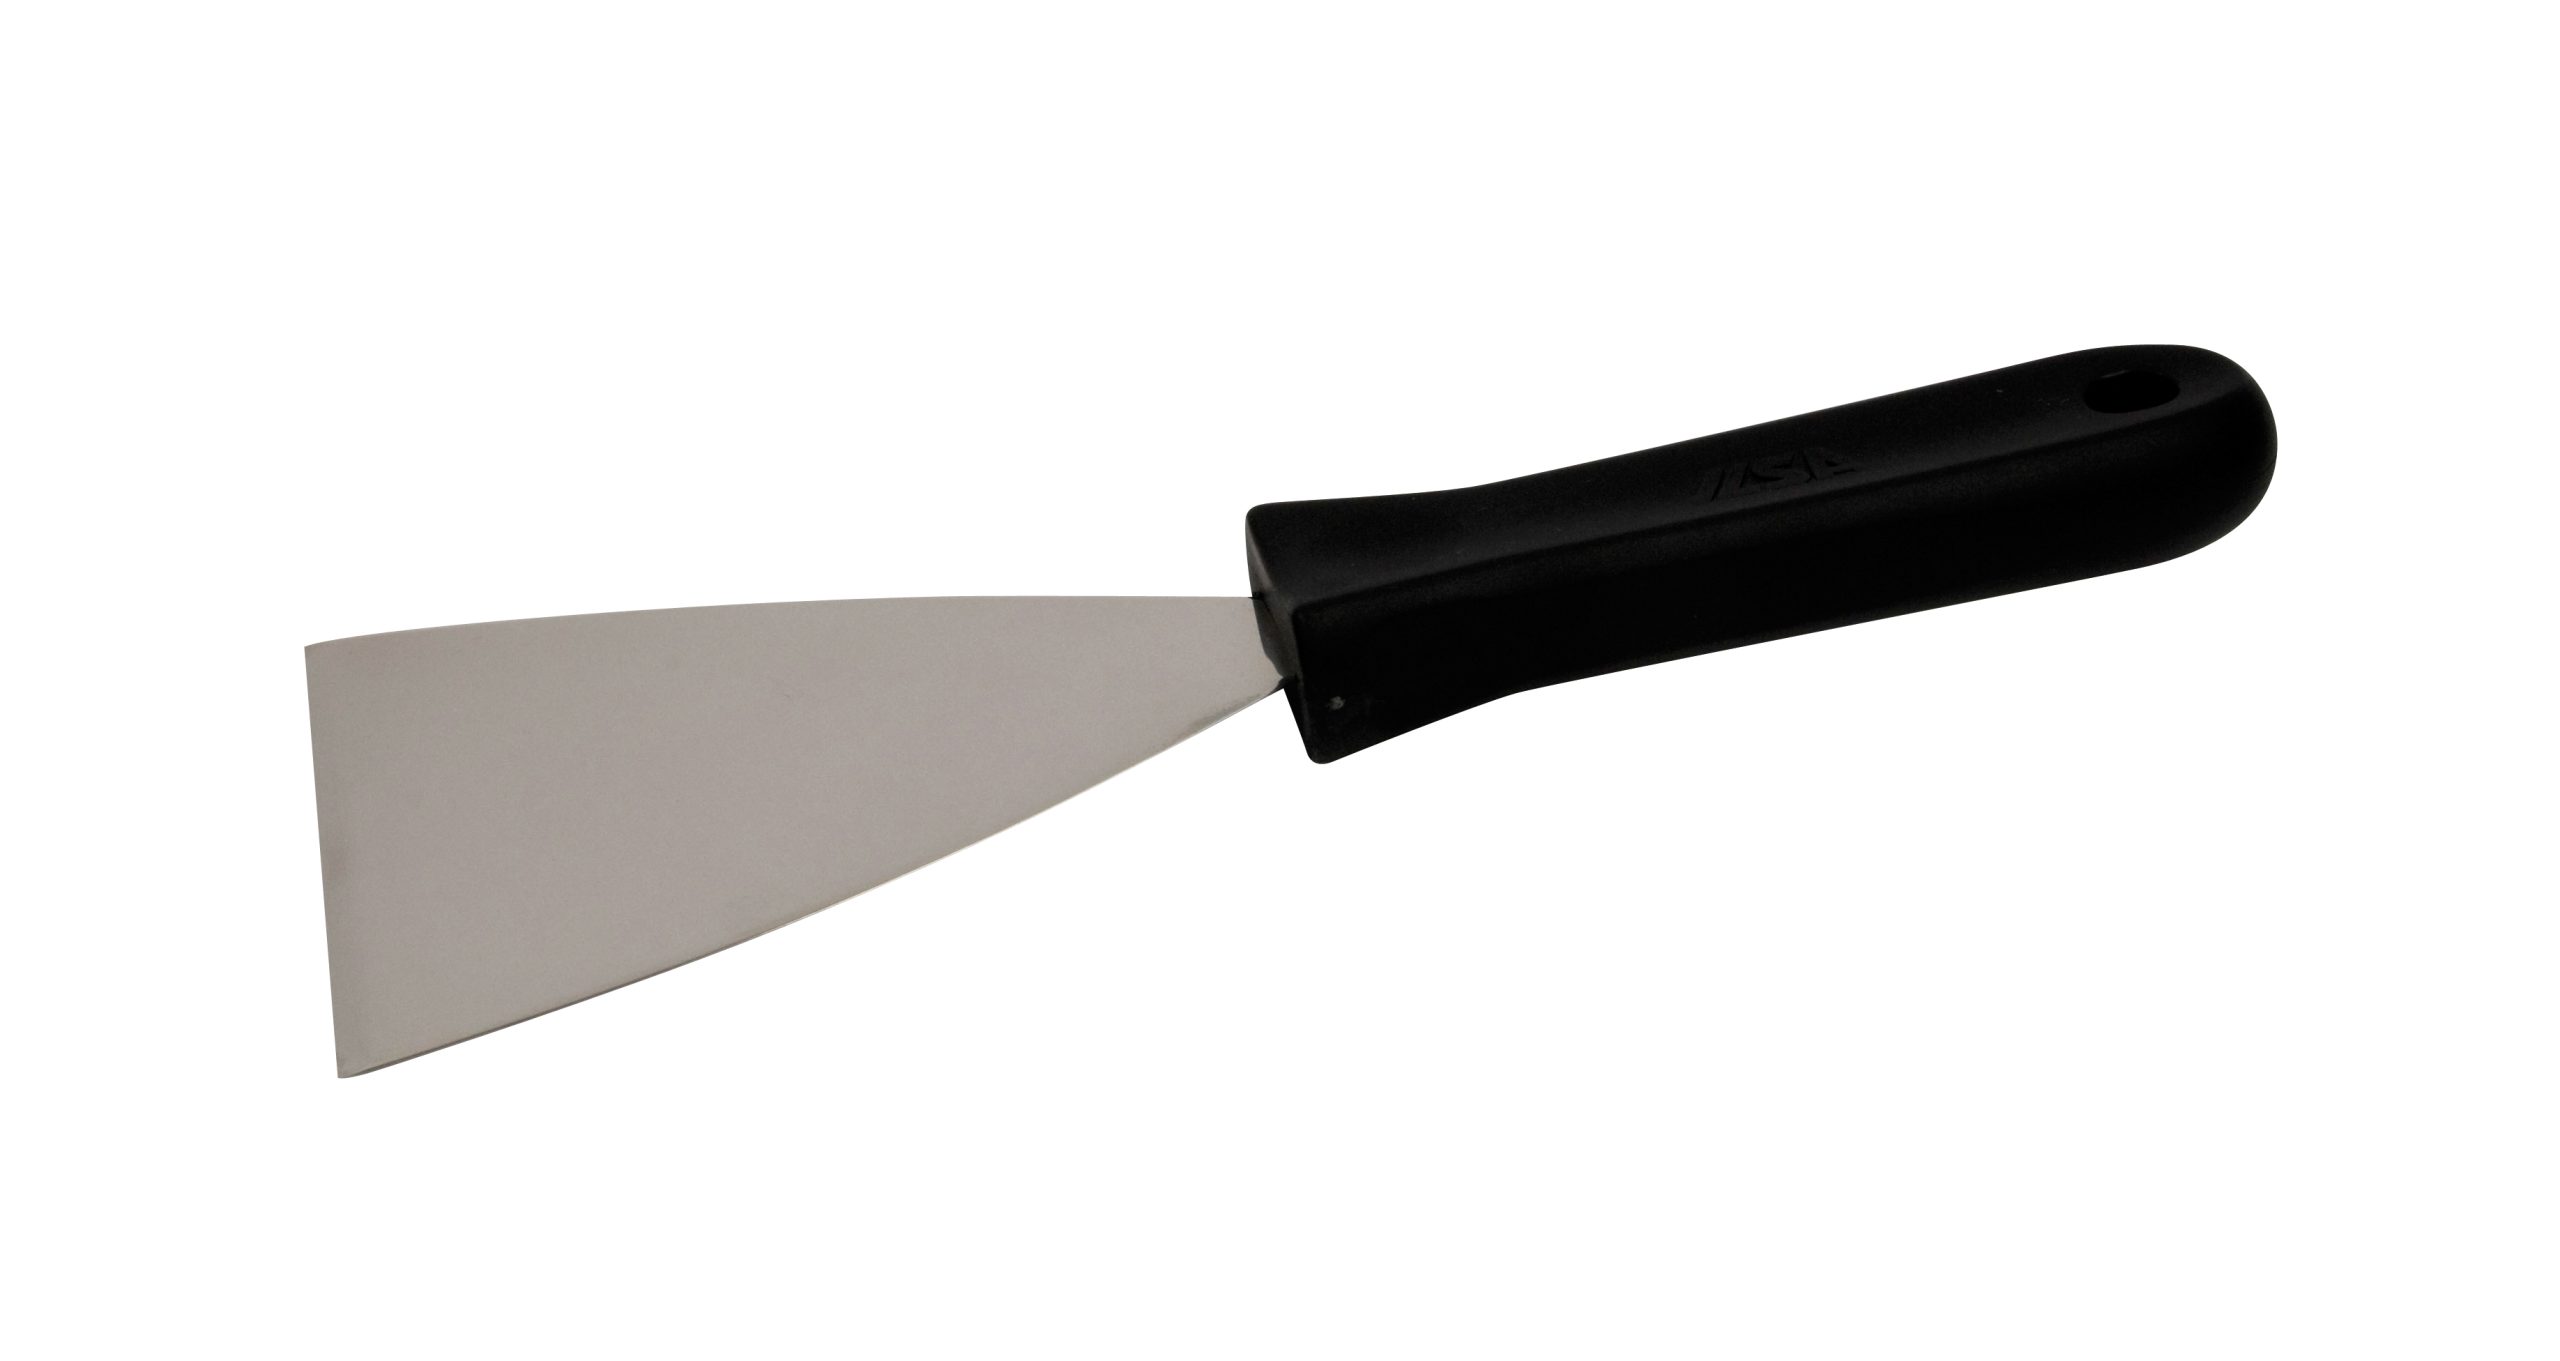 Triangular spatula - Stainless steel 12x10cm Ilsa Italy